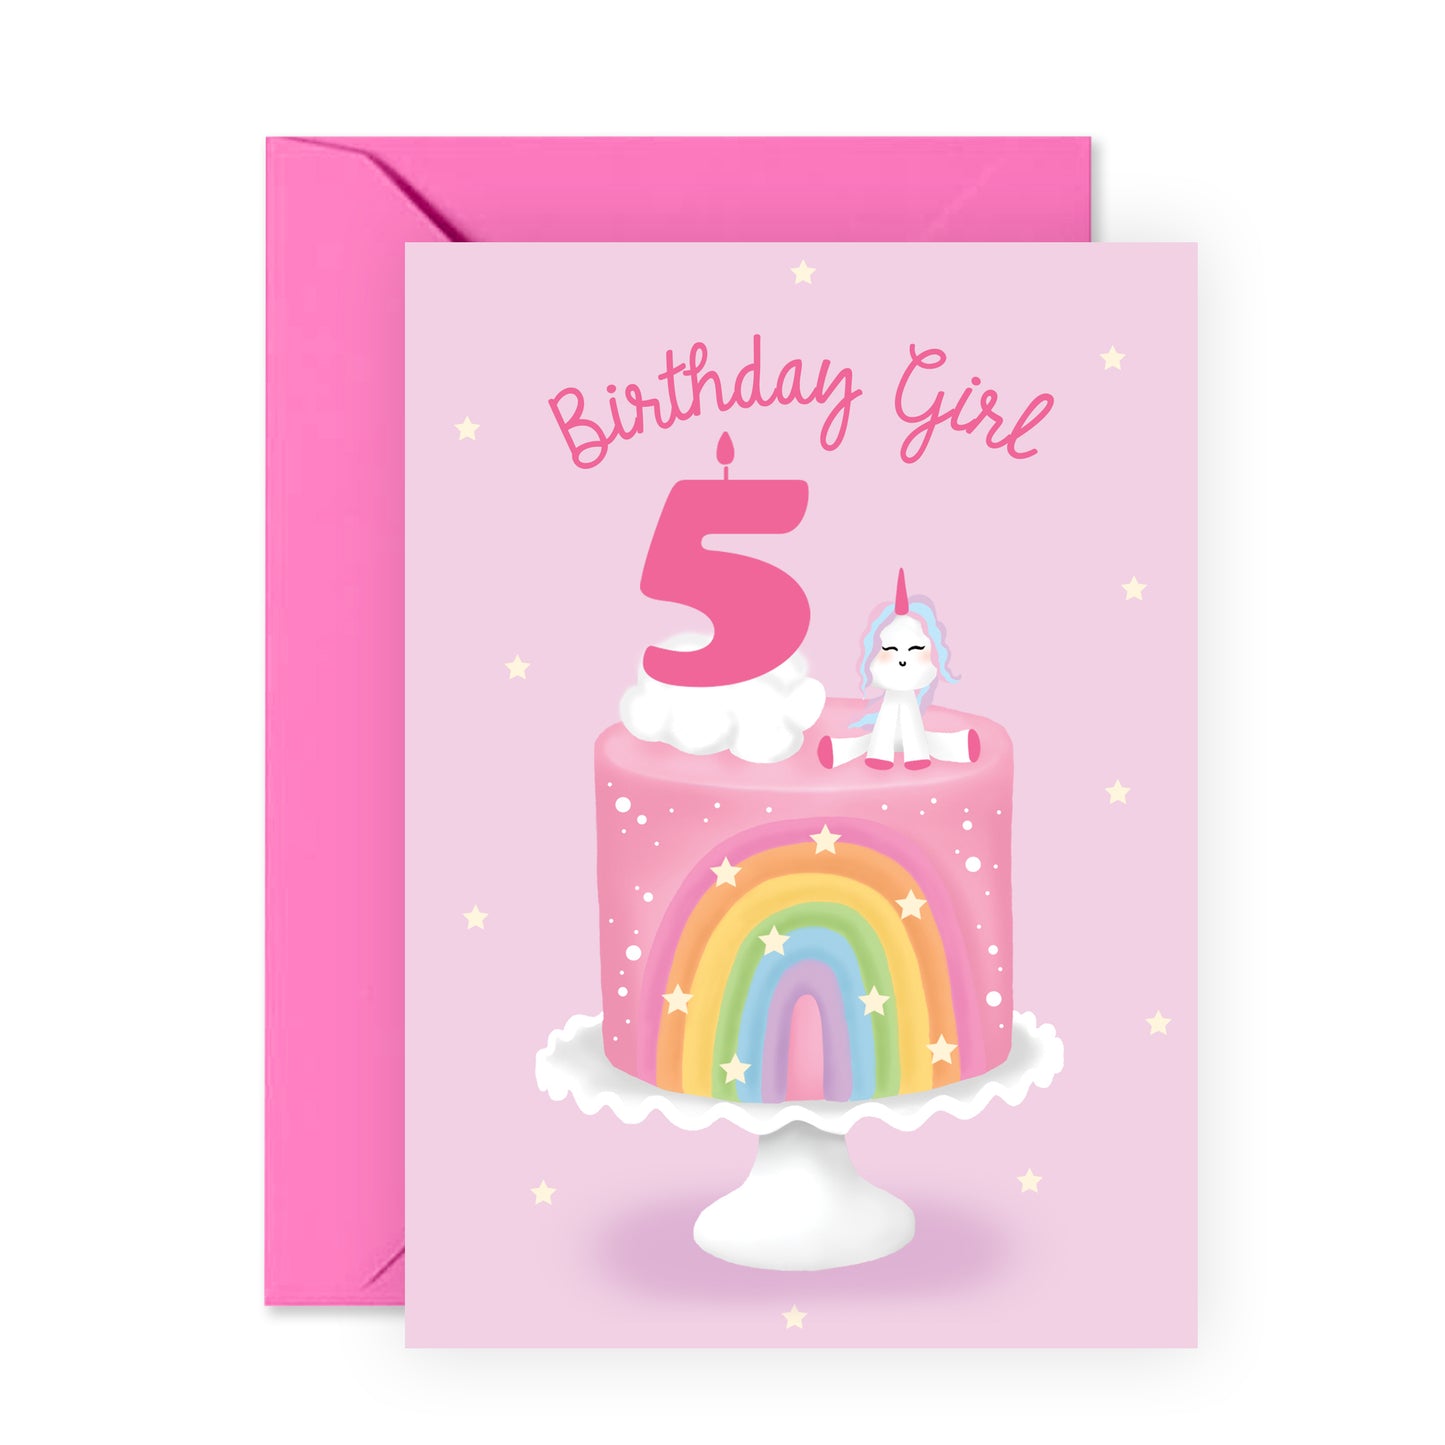 Cute 5th Birthday Card - Birthday Girl Five - For Girls Kids